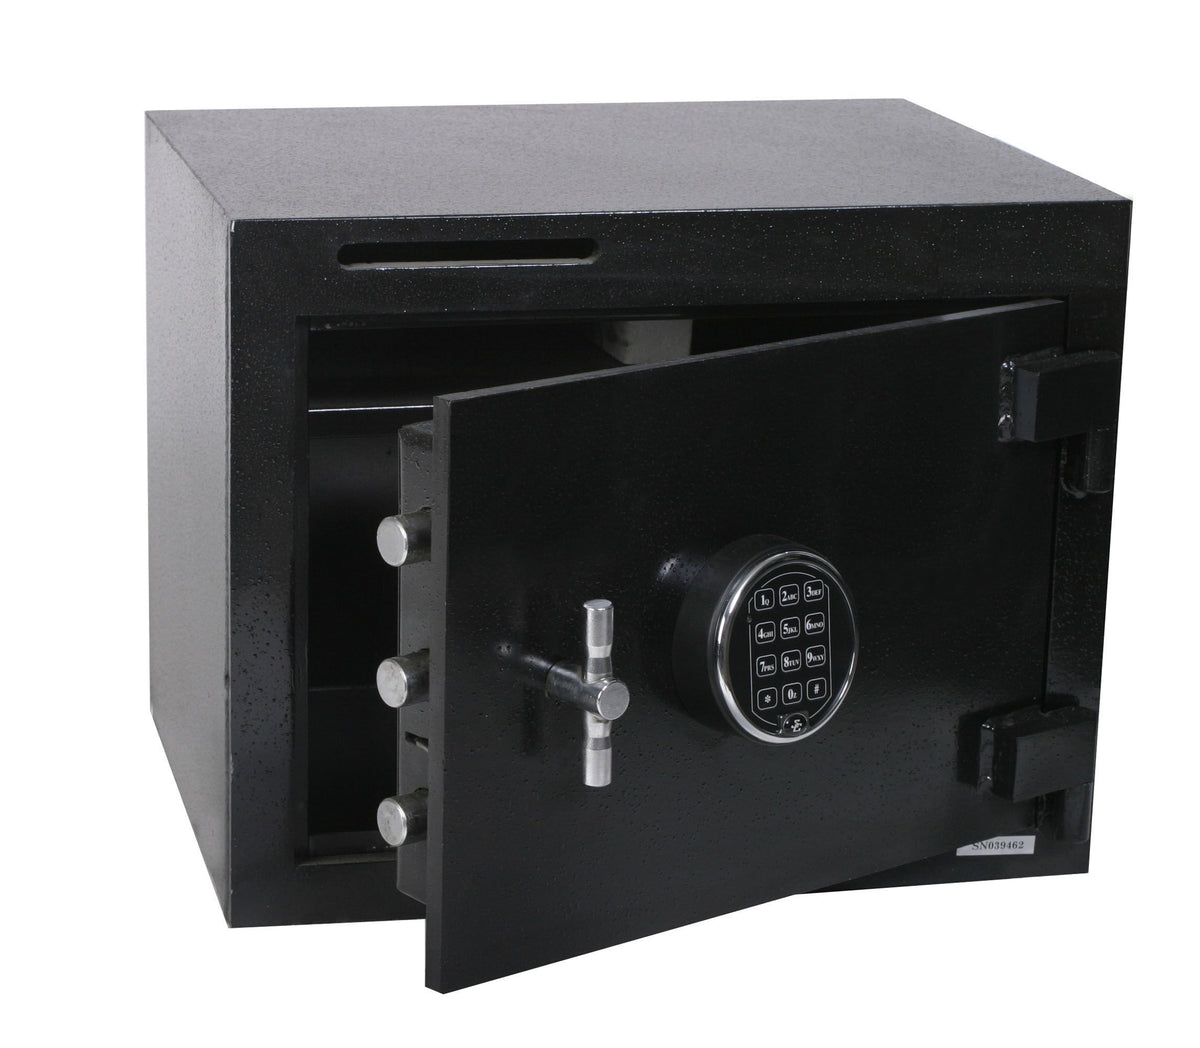 Cennox B1519S-FK1 Deposit Slot Safe